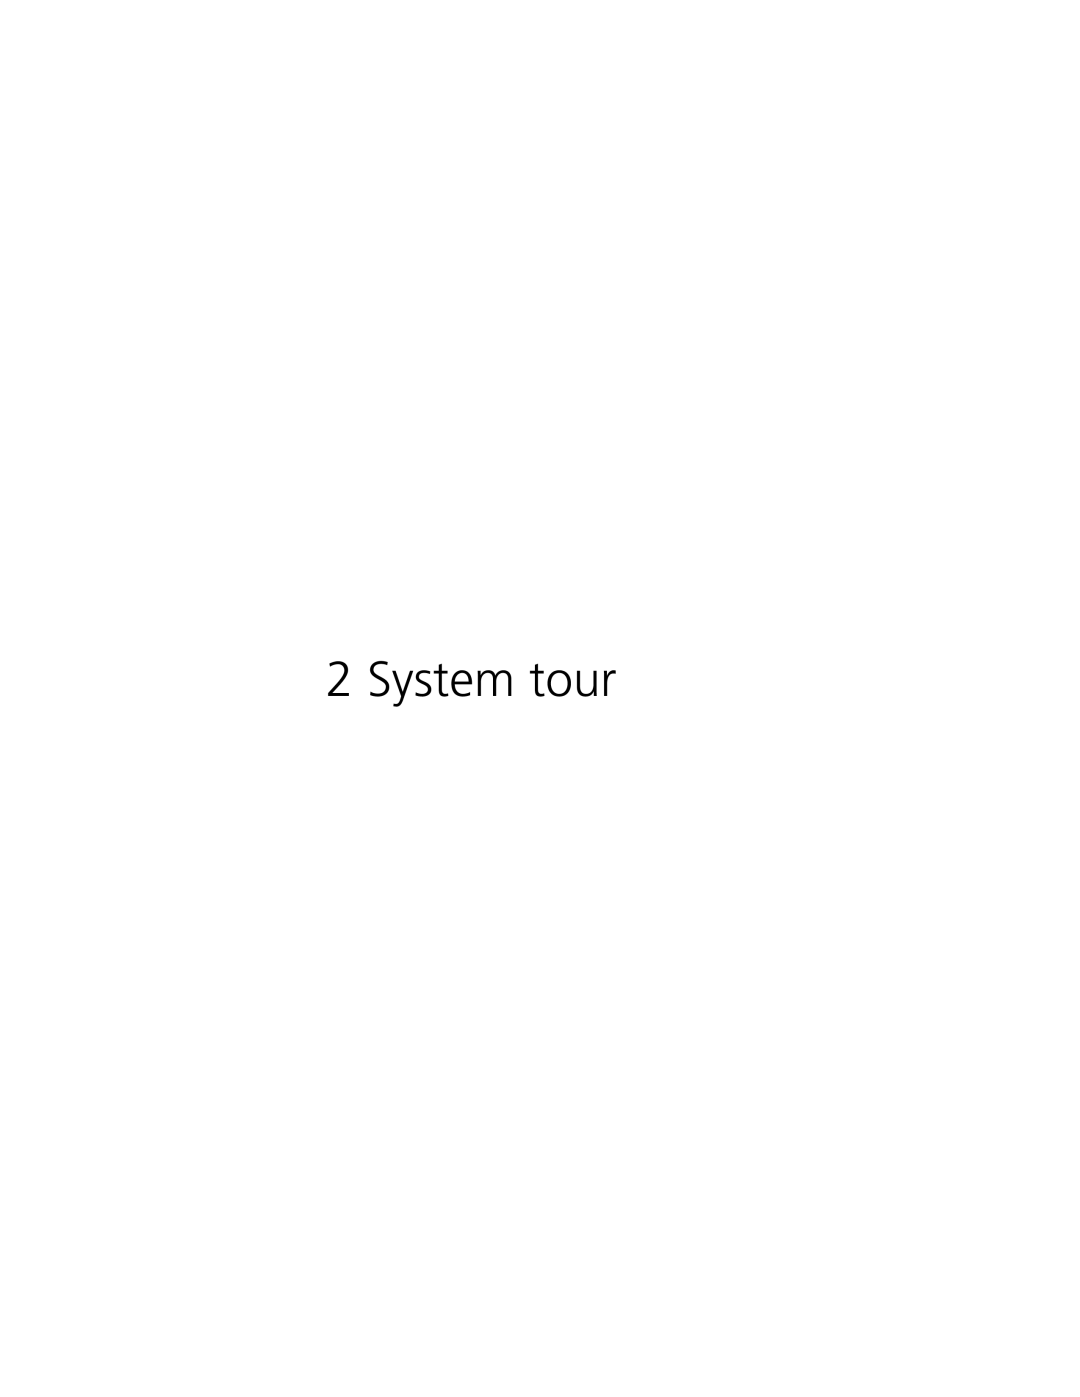 Acer G301 manual System tour 